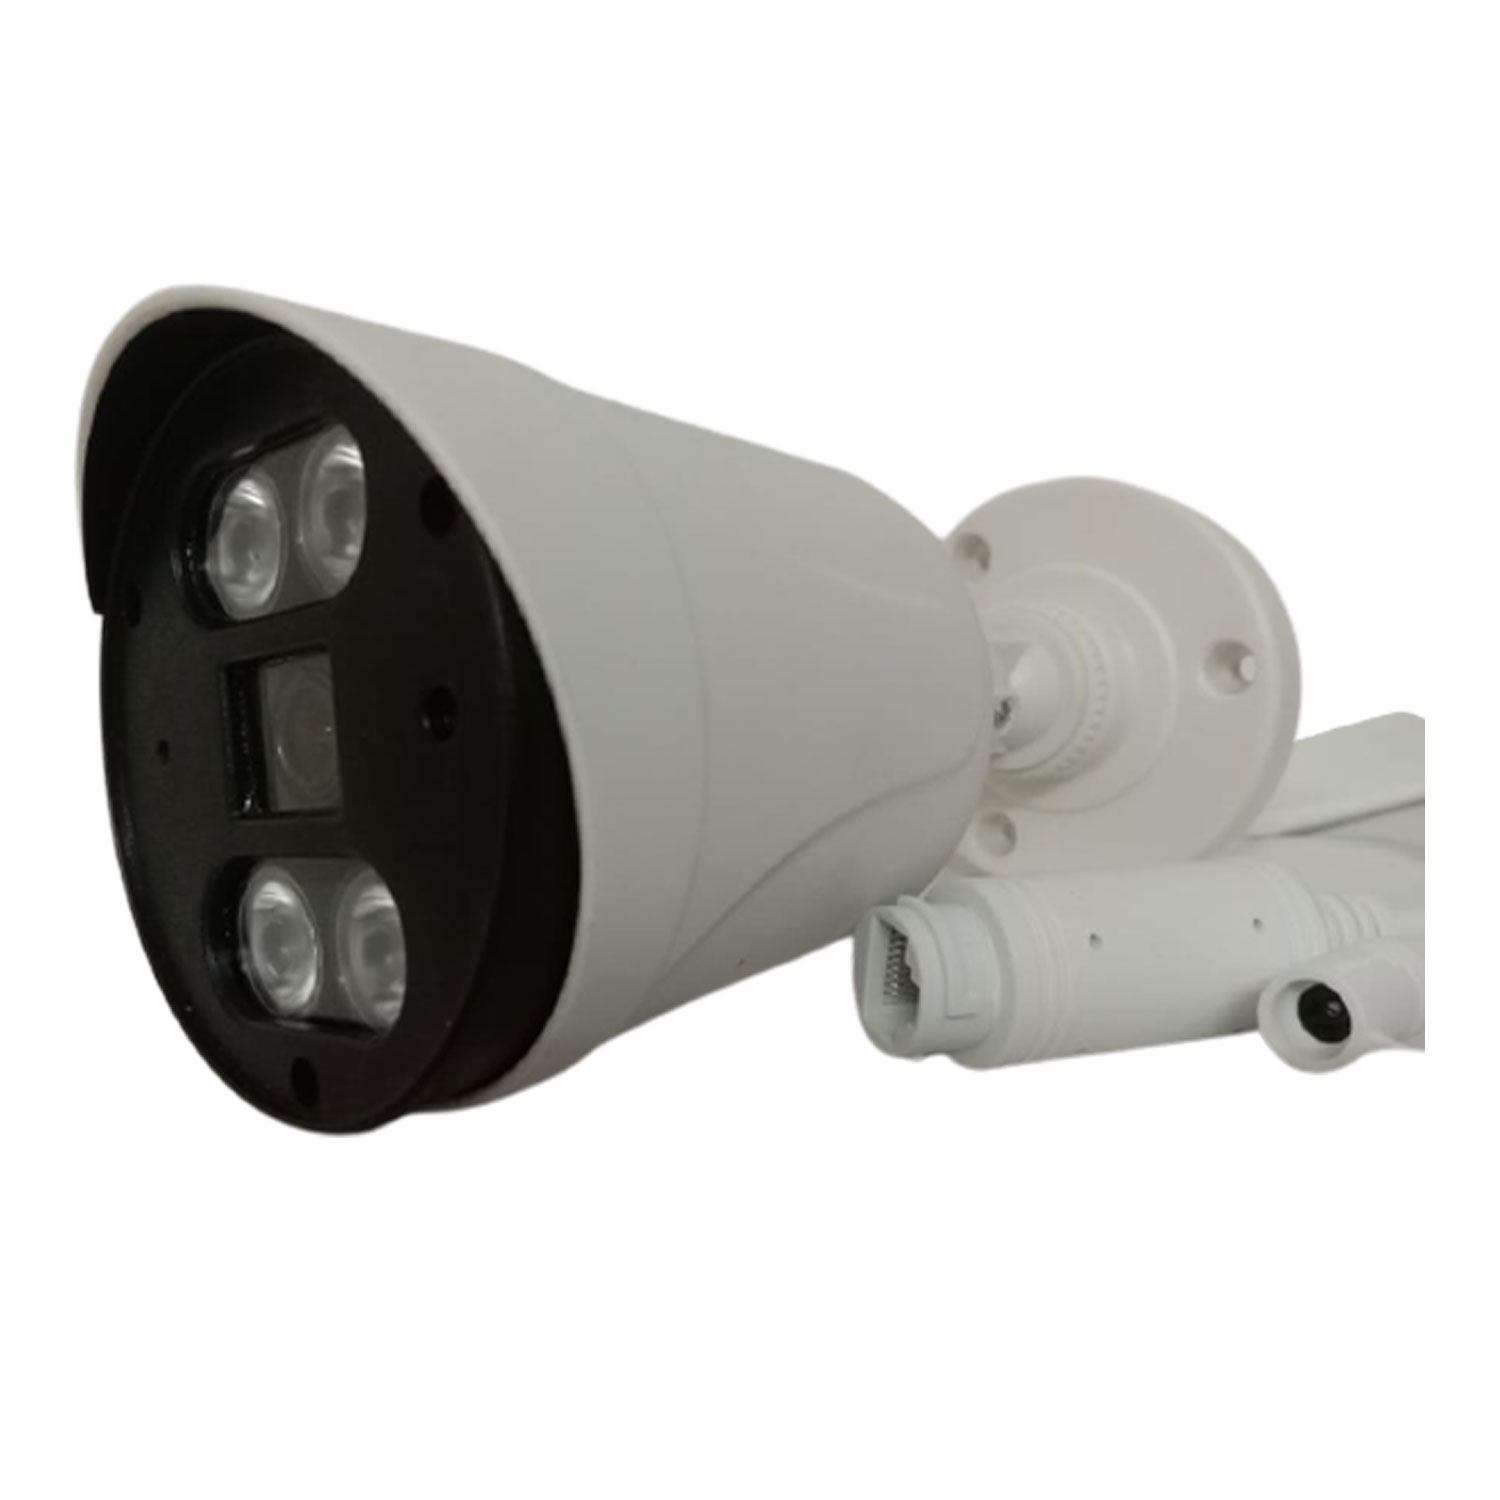 4mp IP Poe Bullet CCTV